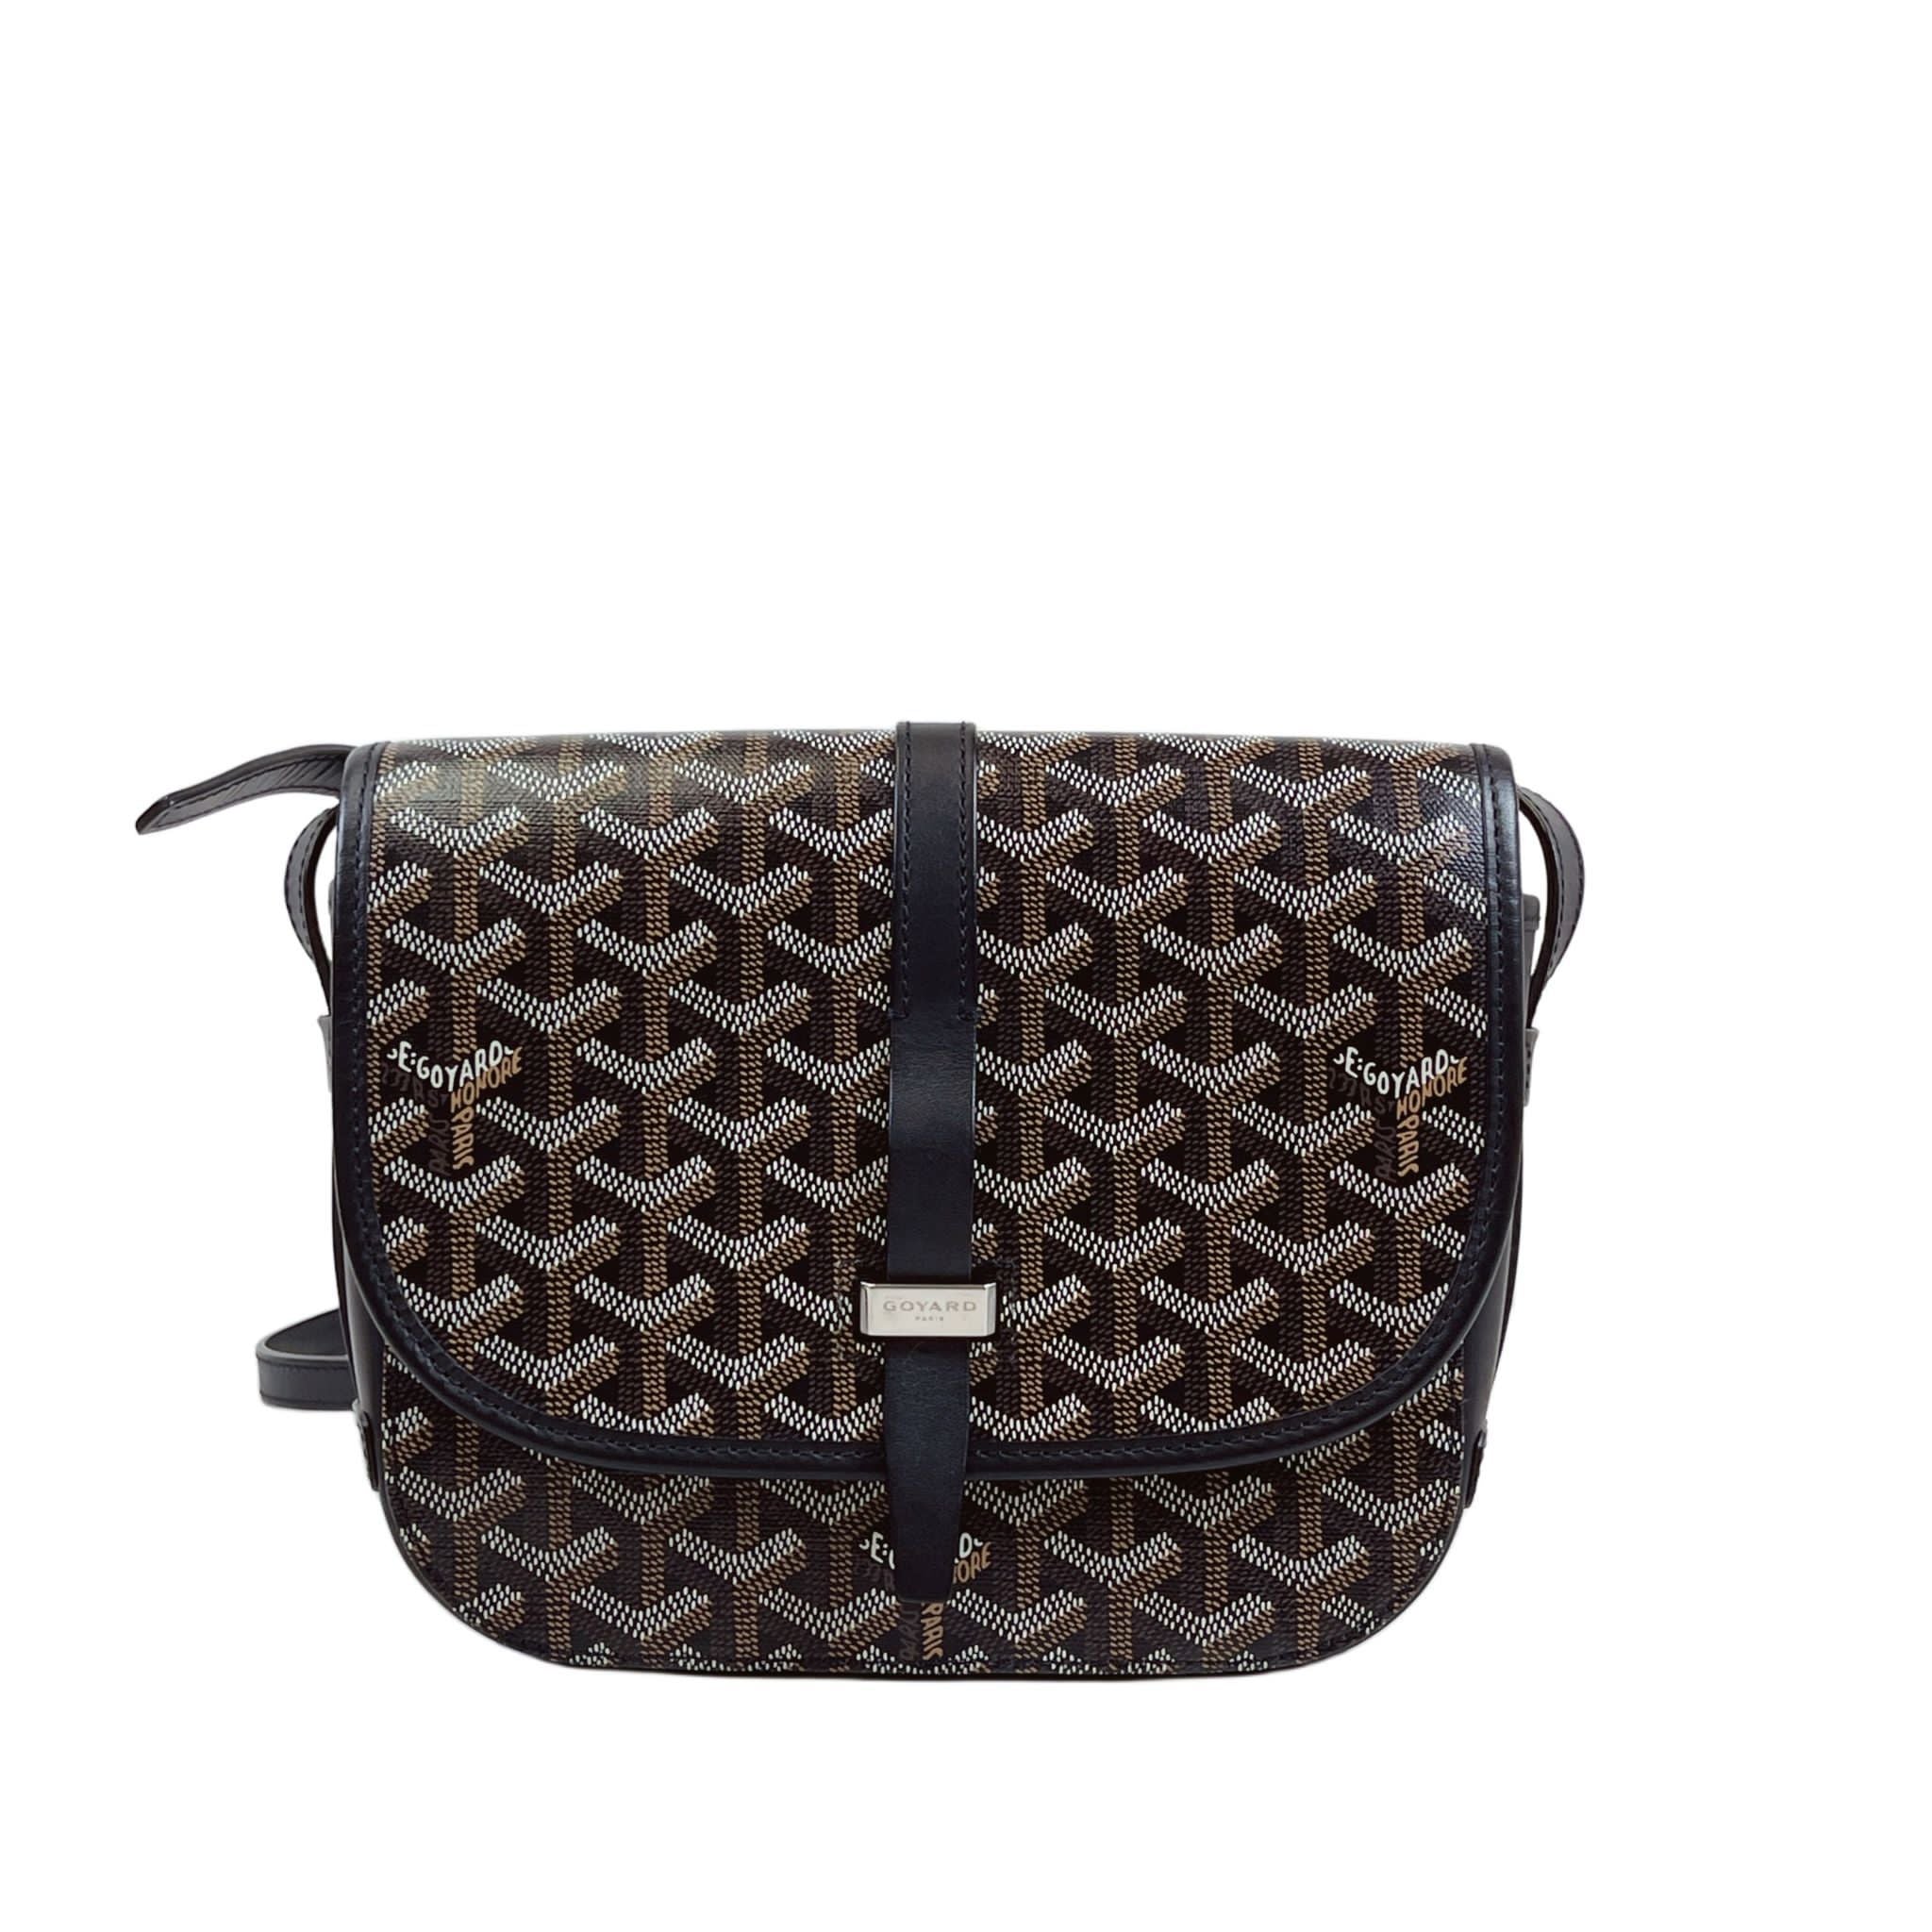 Shop authentic Chanel Classic Medium Double Flap Bag at revogue